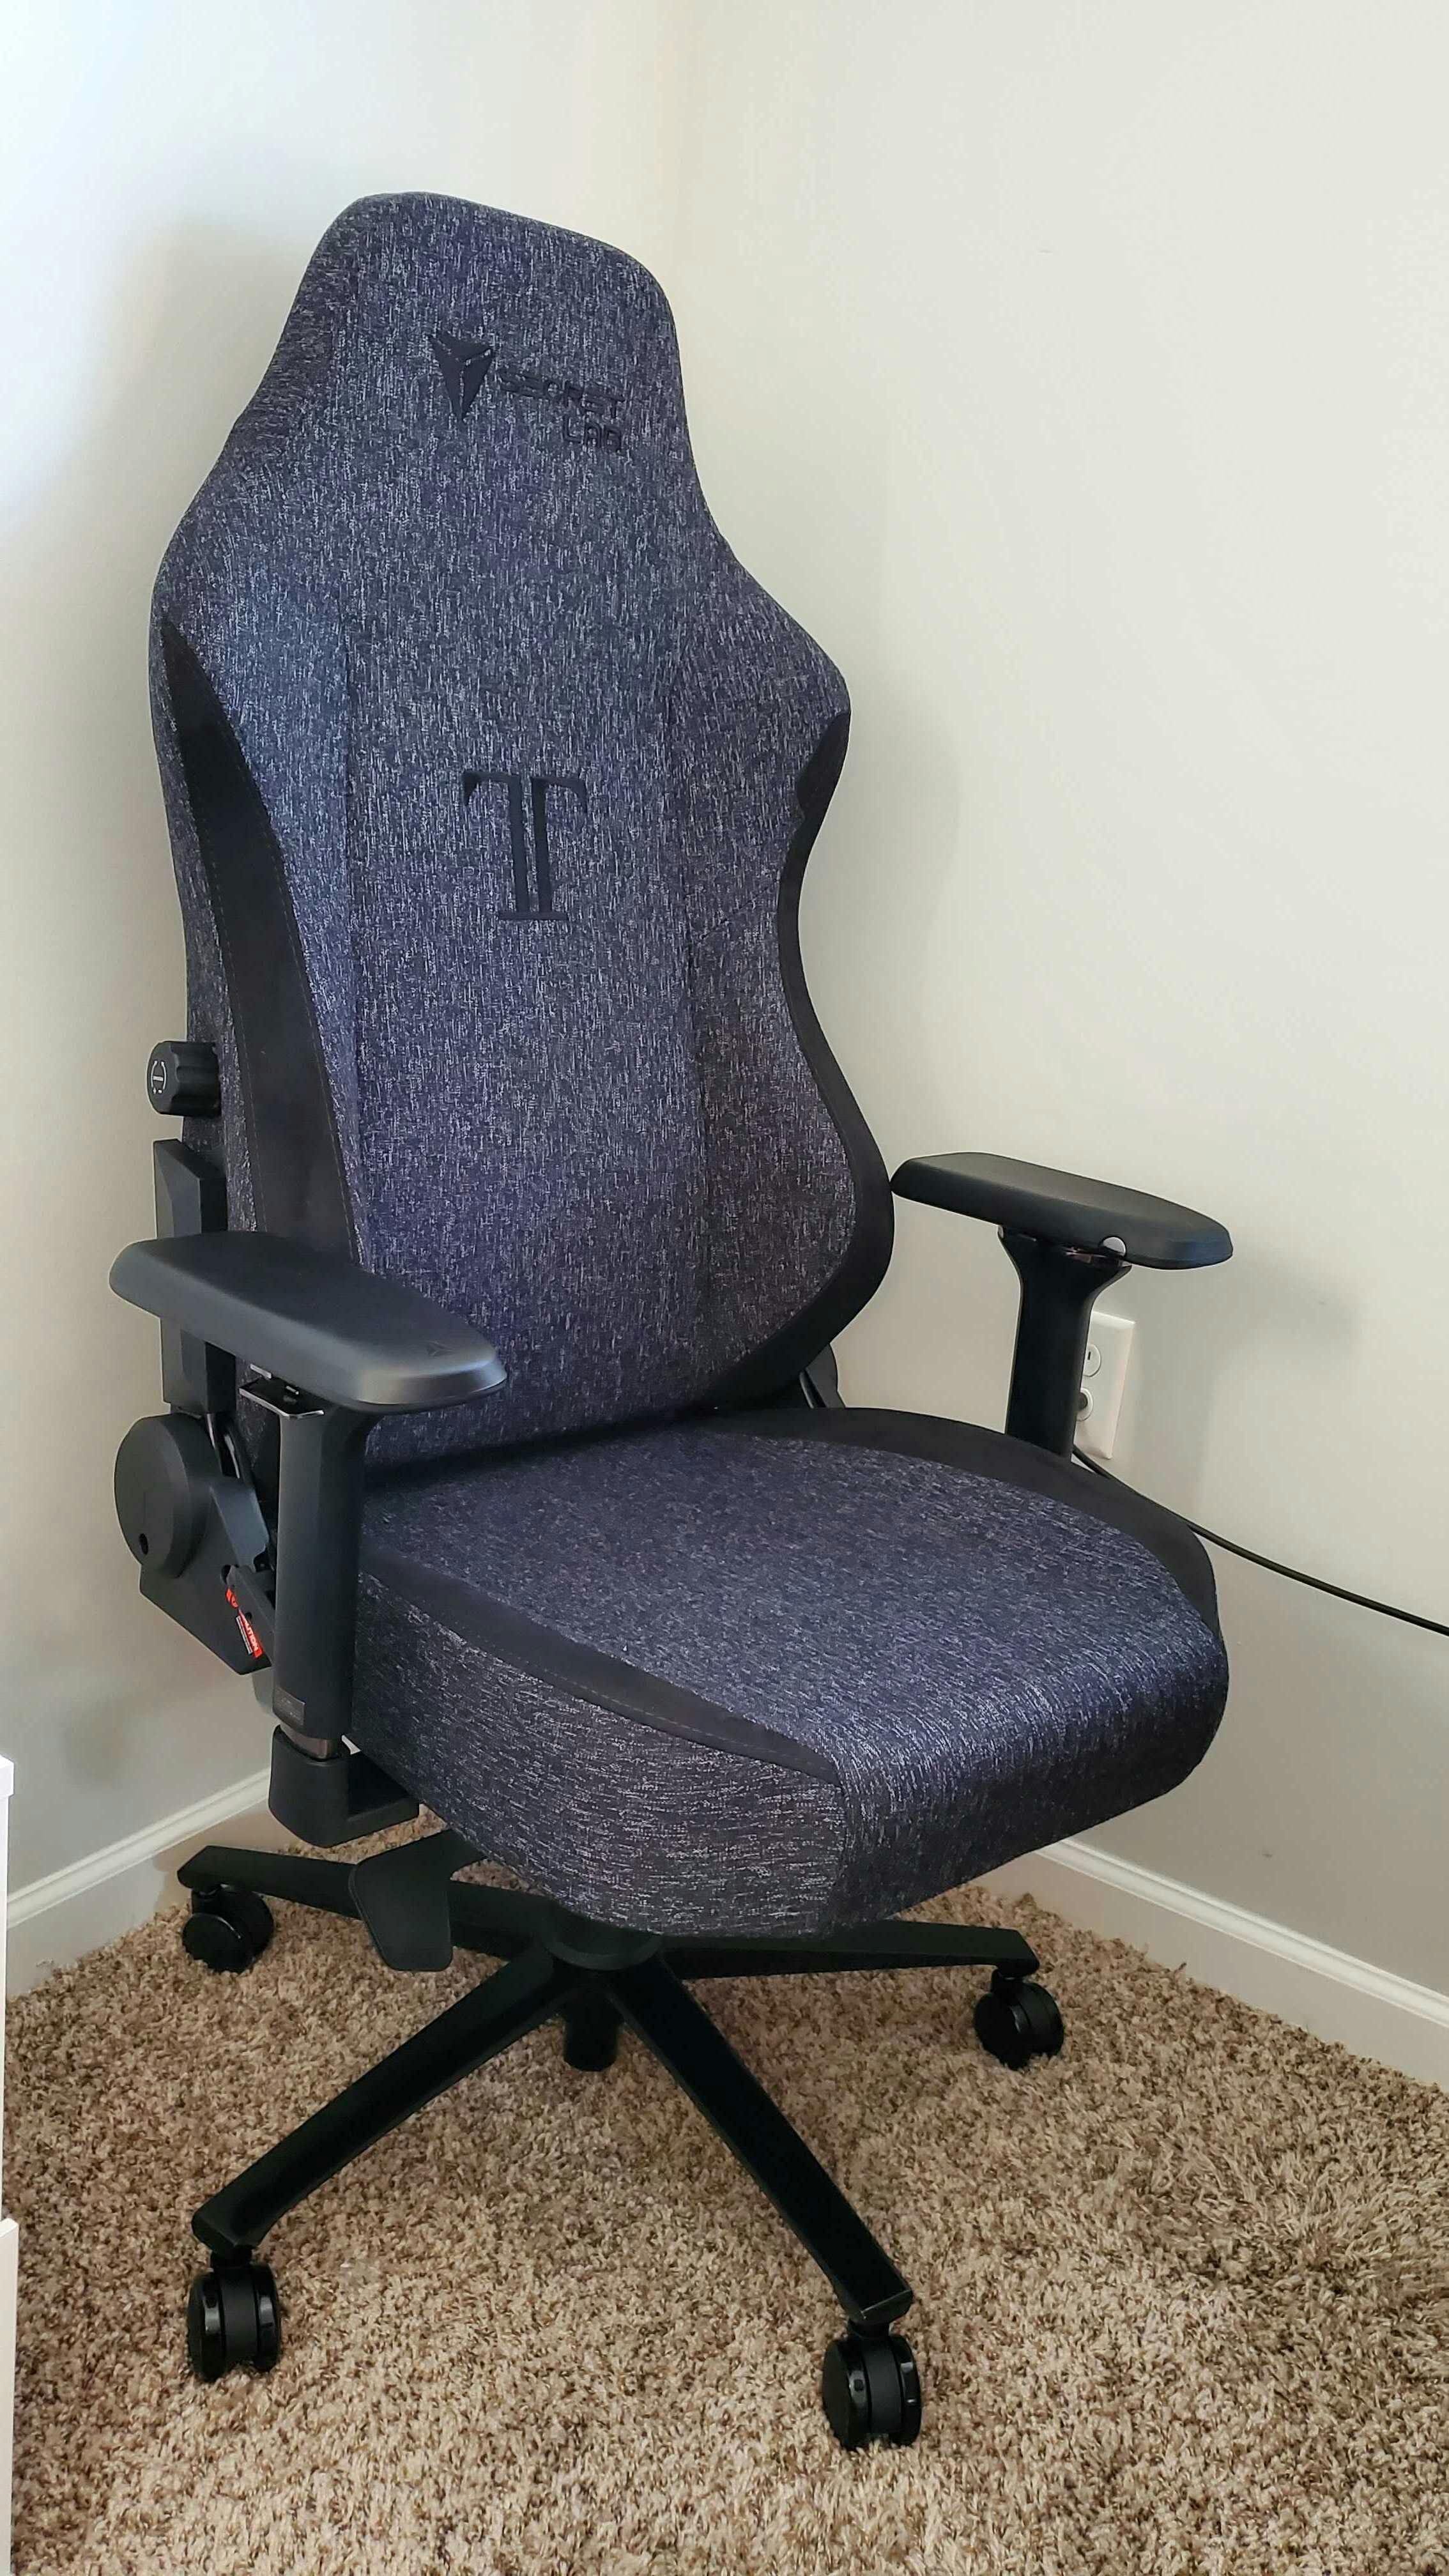 SecretLab TITAN chair in room corner